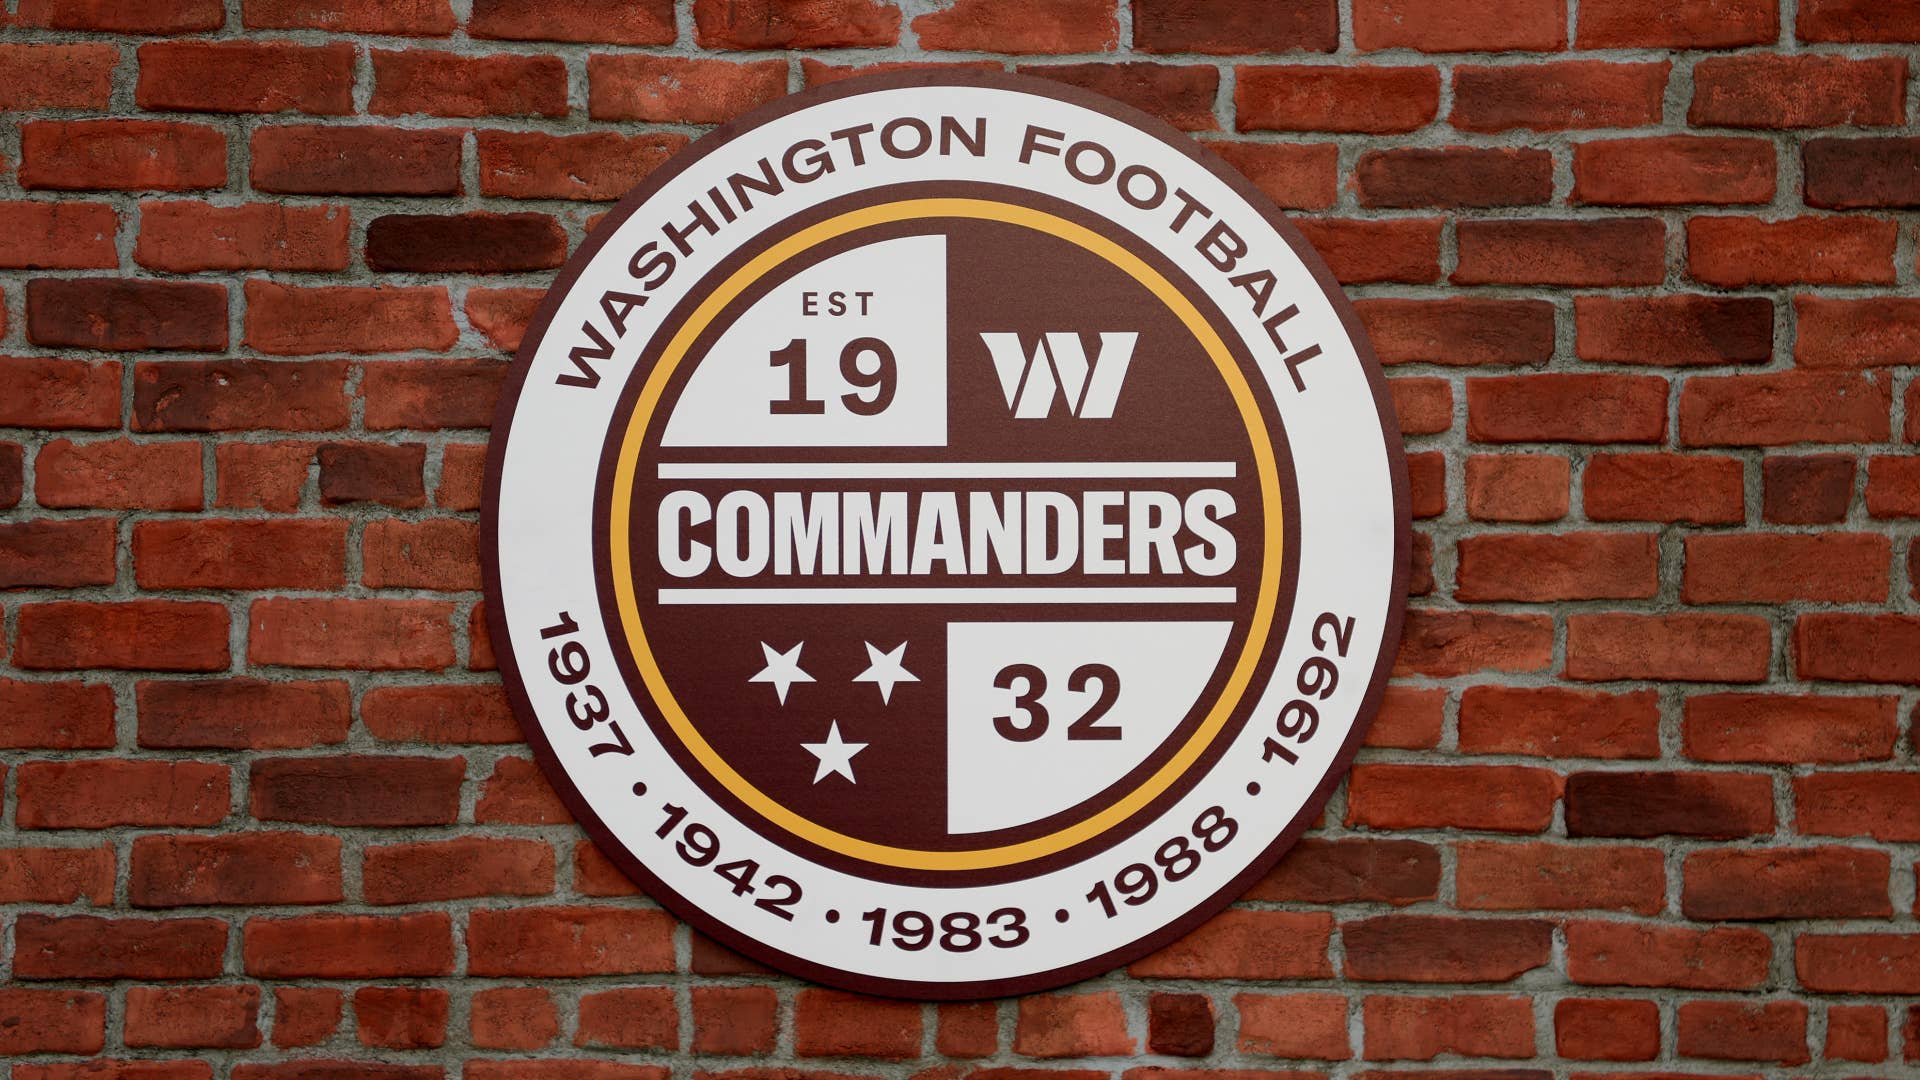 Washington Commanders team unveils new logo